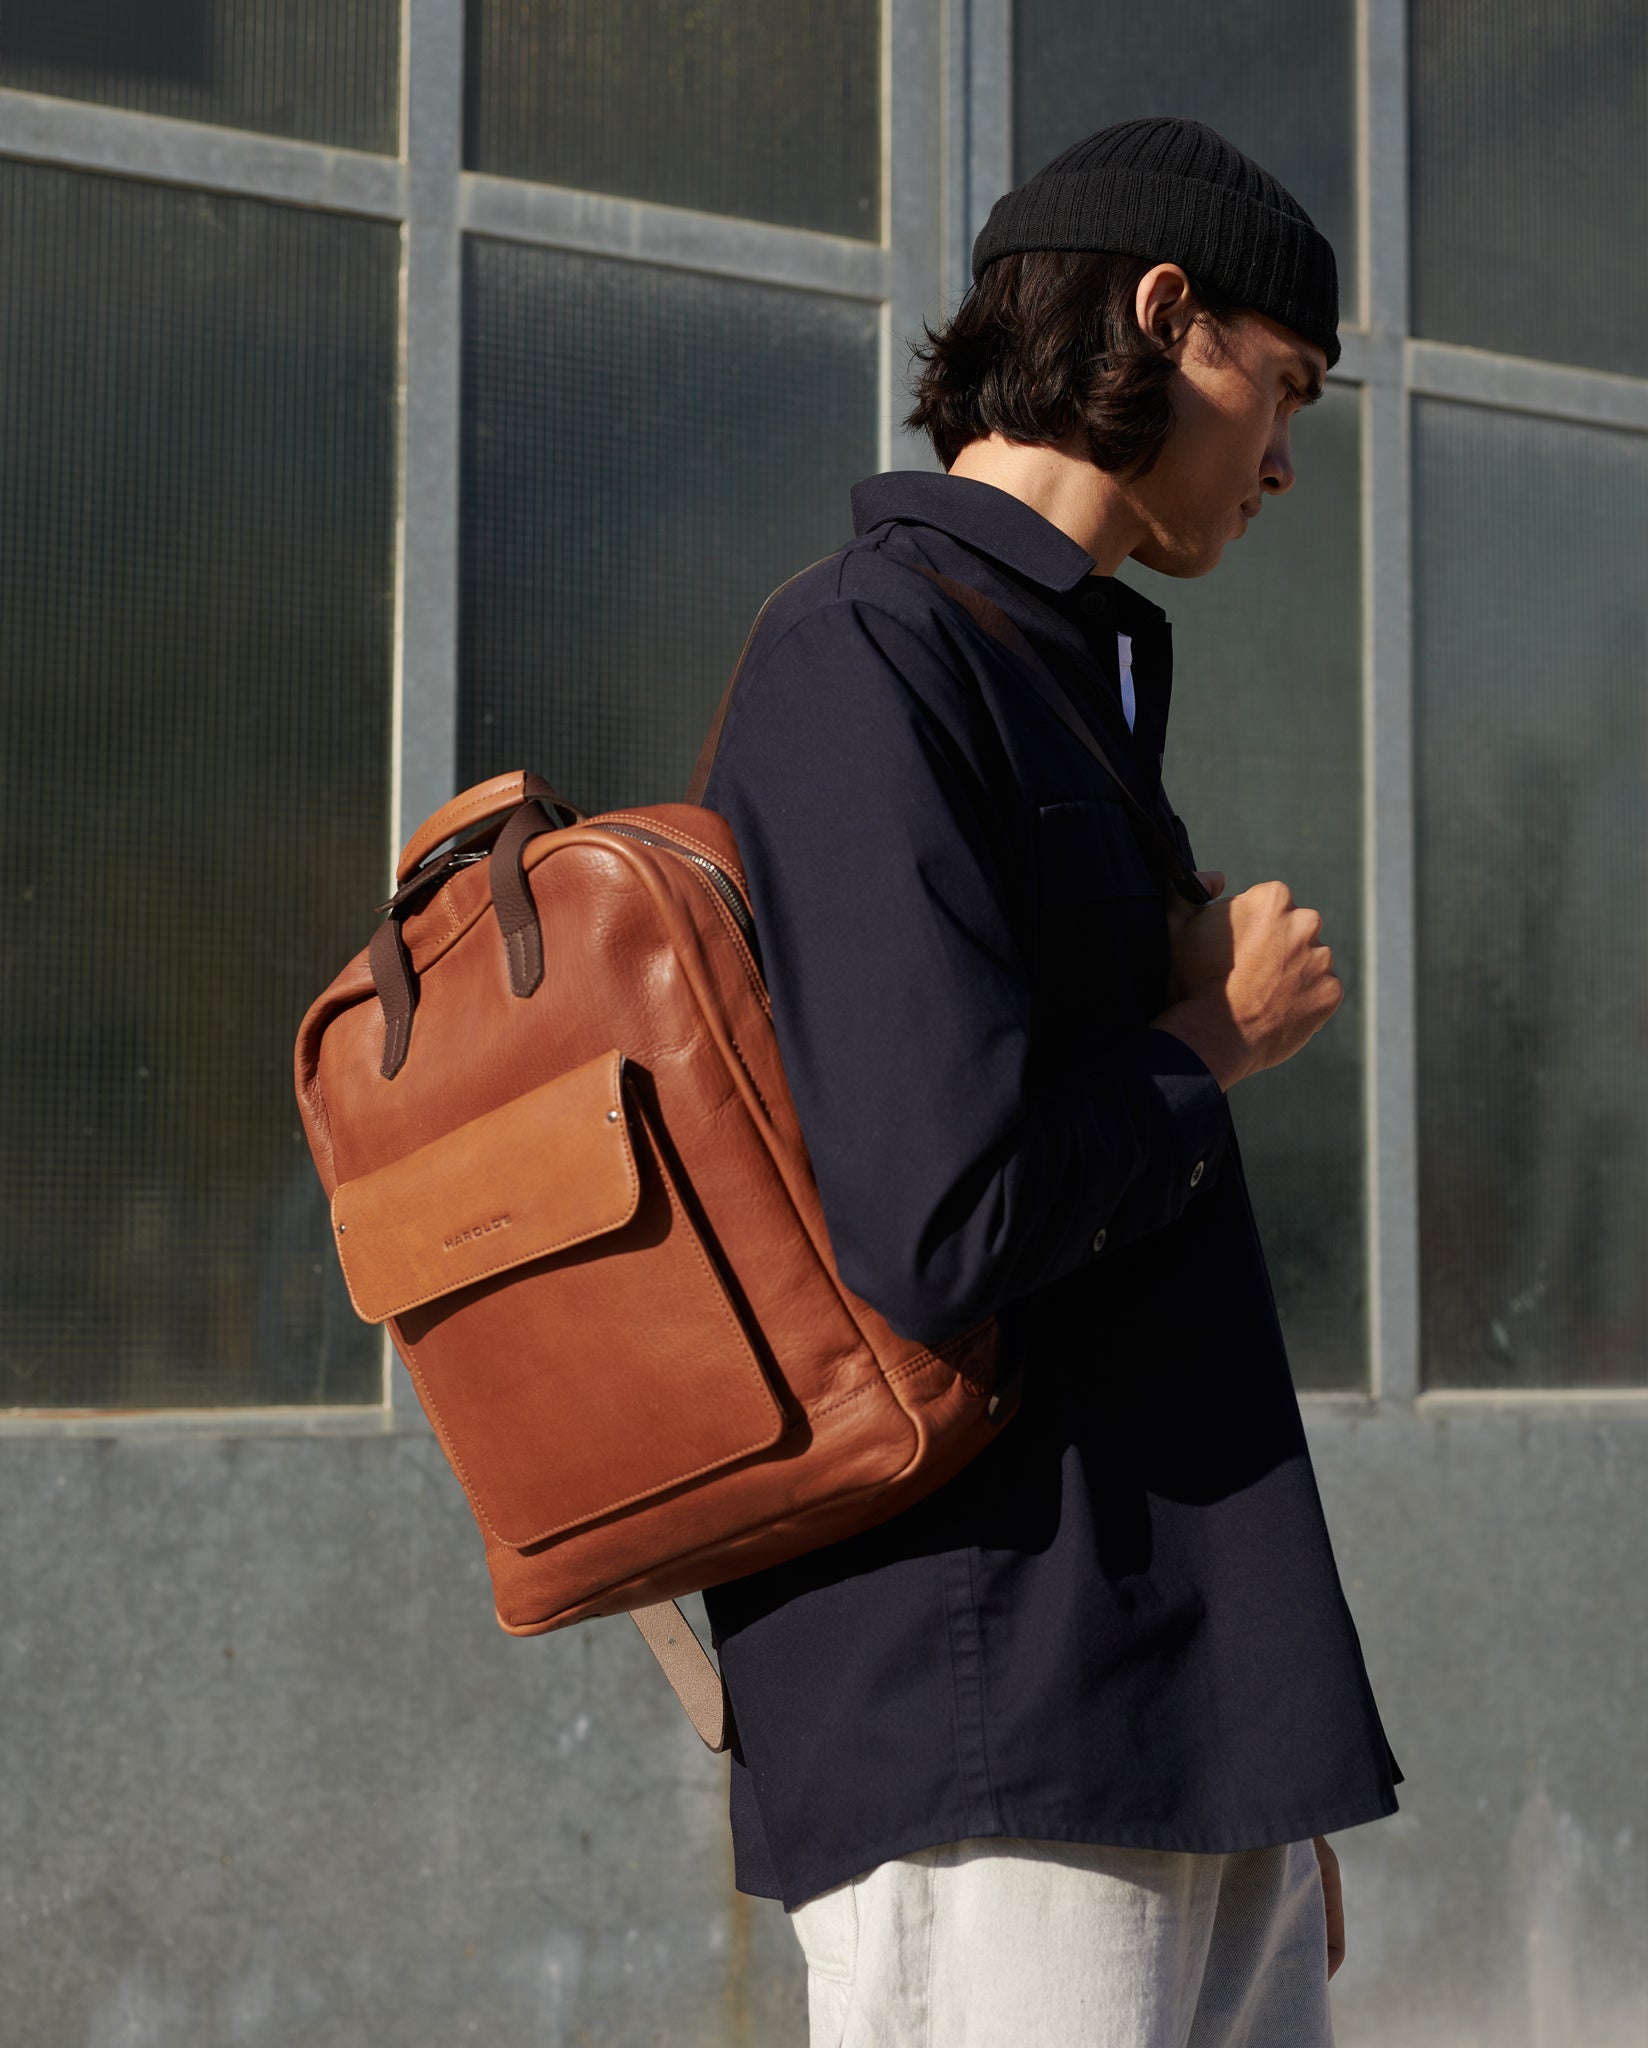 Notebook messengerbag/backpack